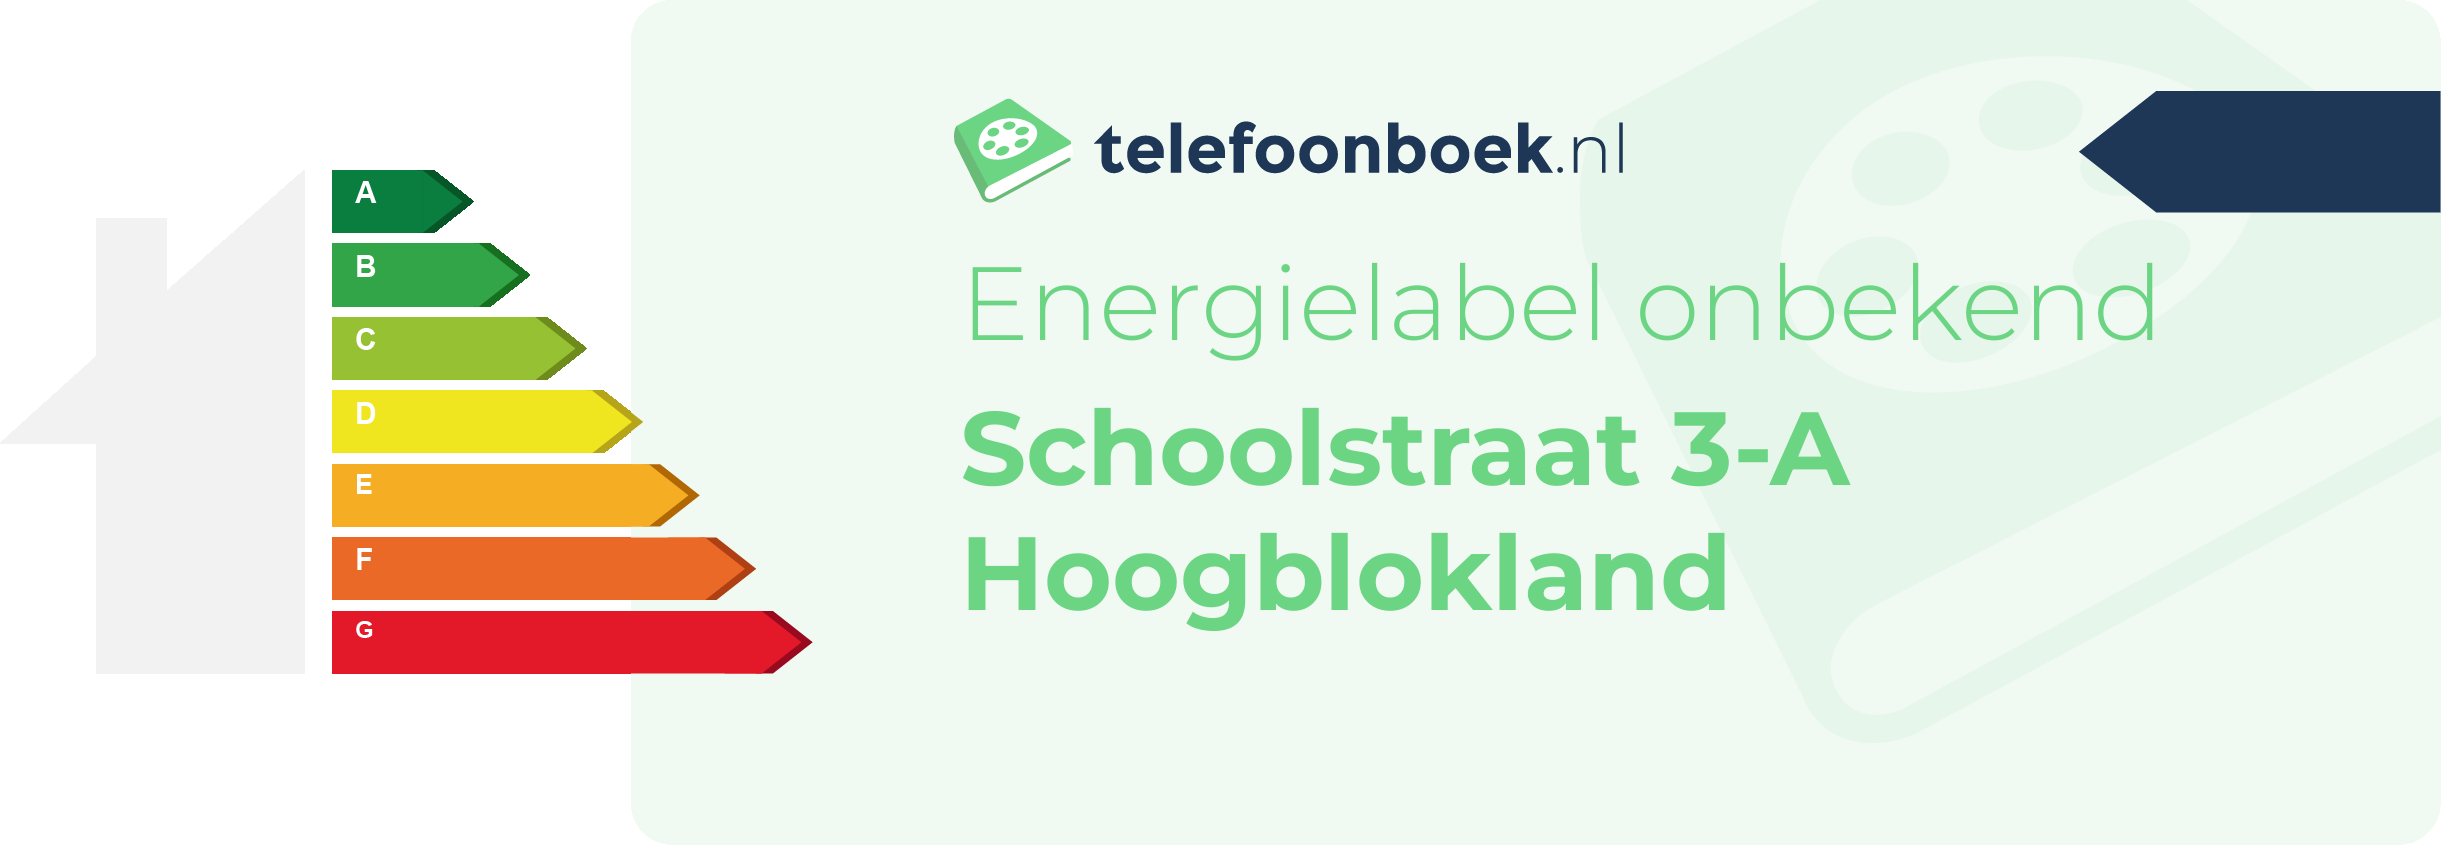 Energielabel Schoolstraat 3-A Hoogblokland